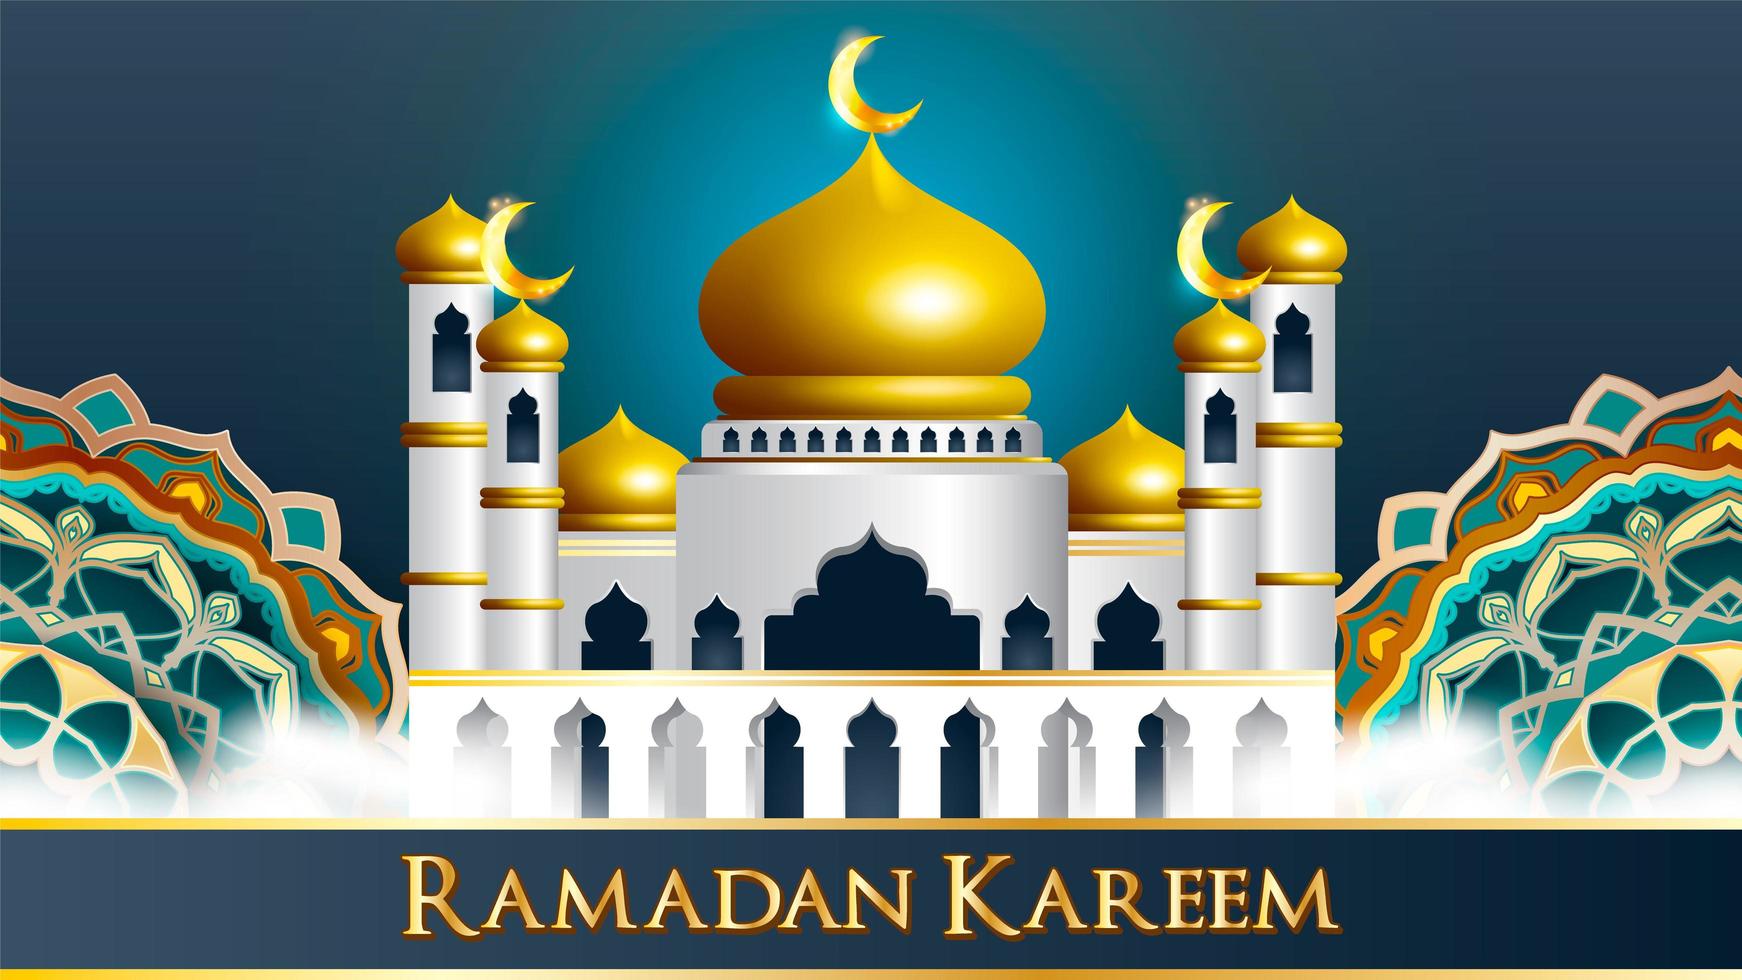 Ramadan Kareem islamic design mosque with minarets vector